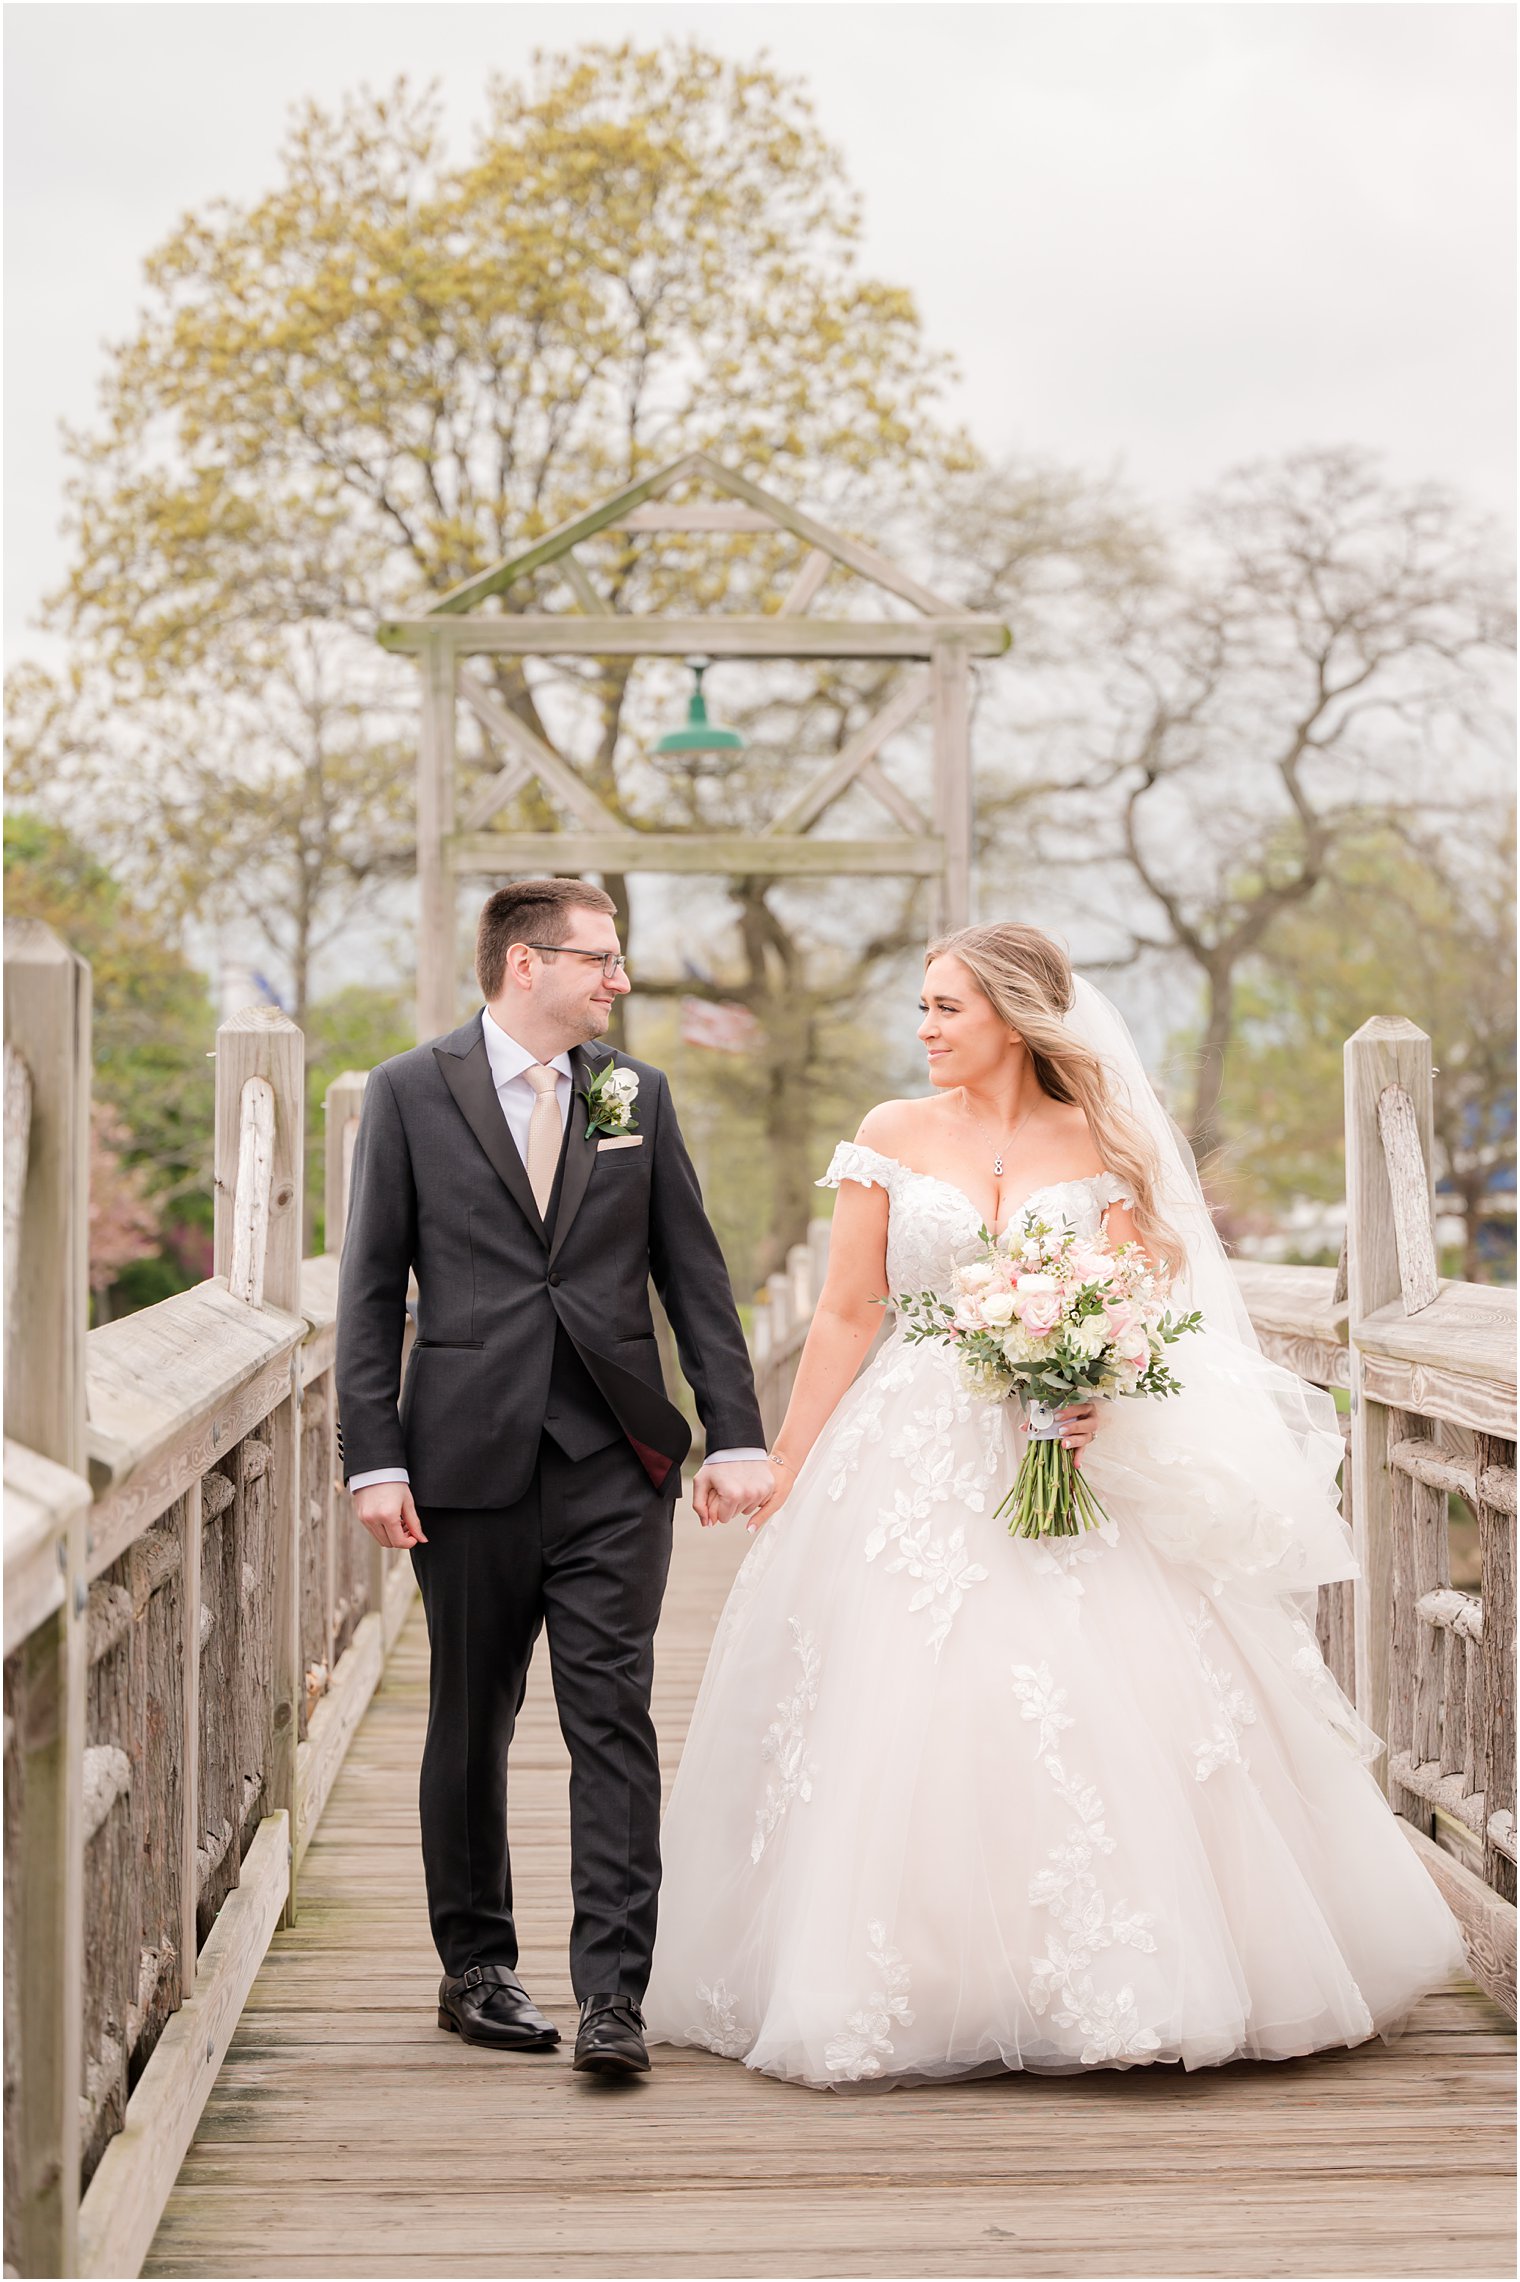 newlyweds hold hands walking on wooden bridge in Divine Park